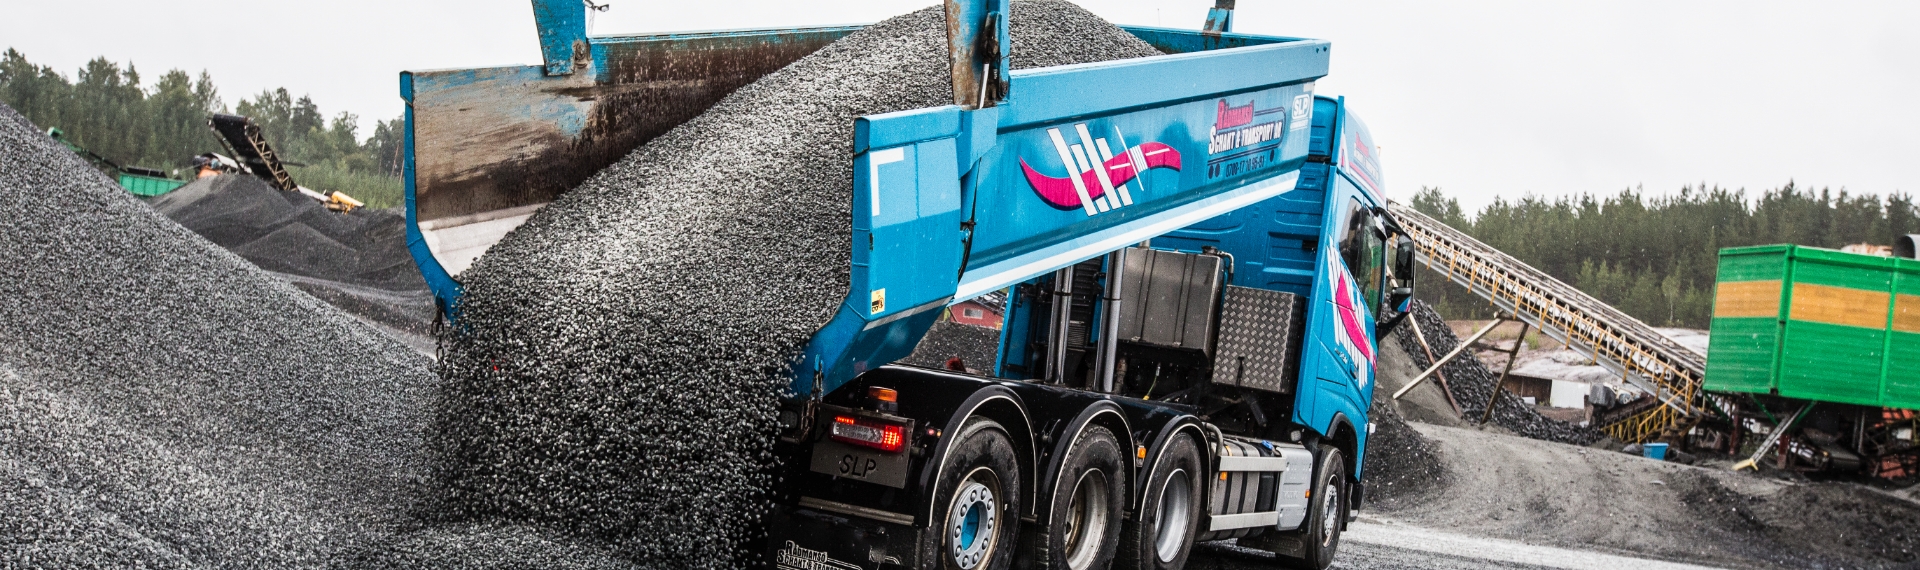 Hardox® 500 Tuf 제품으로 제작된 적재함을 갖춘 덤프트럭으로 엄청 많은 양의 마모를 유발하는 암석들을 하역할 수 있습니다.